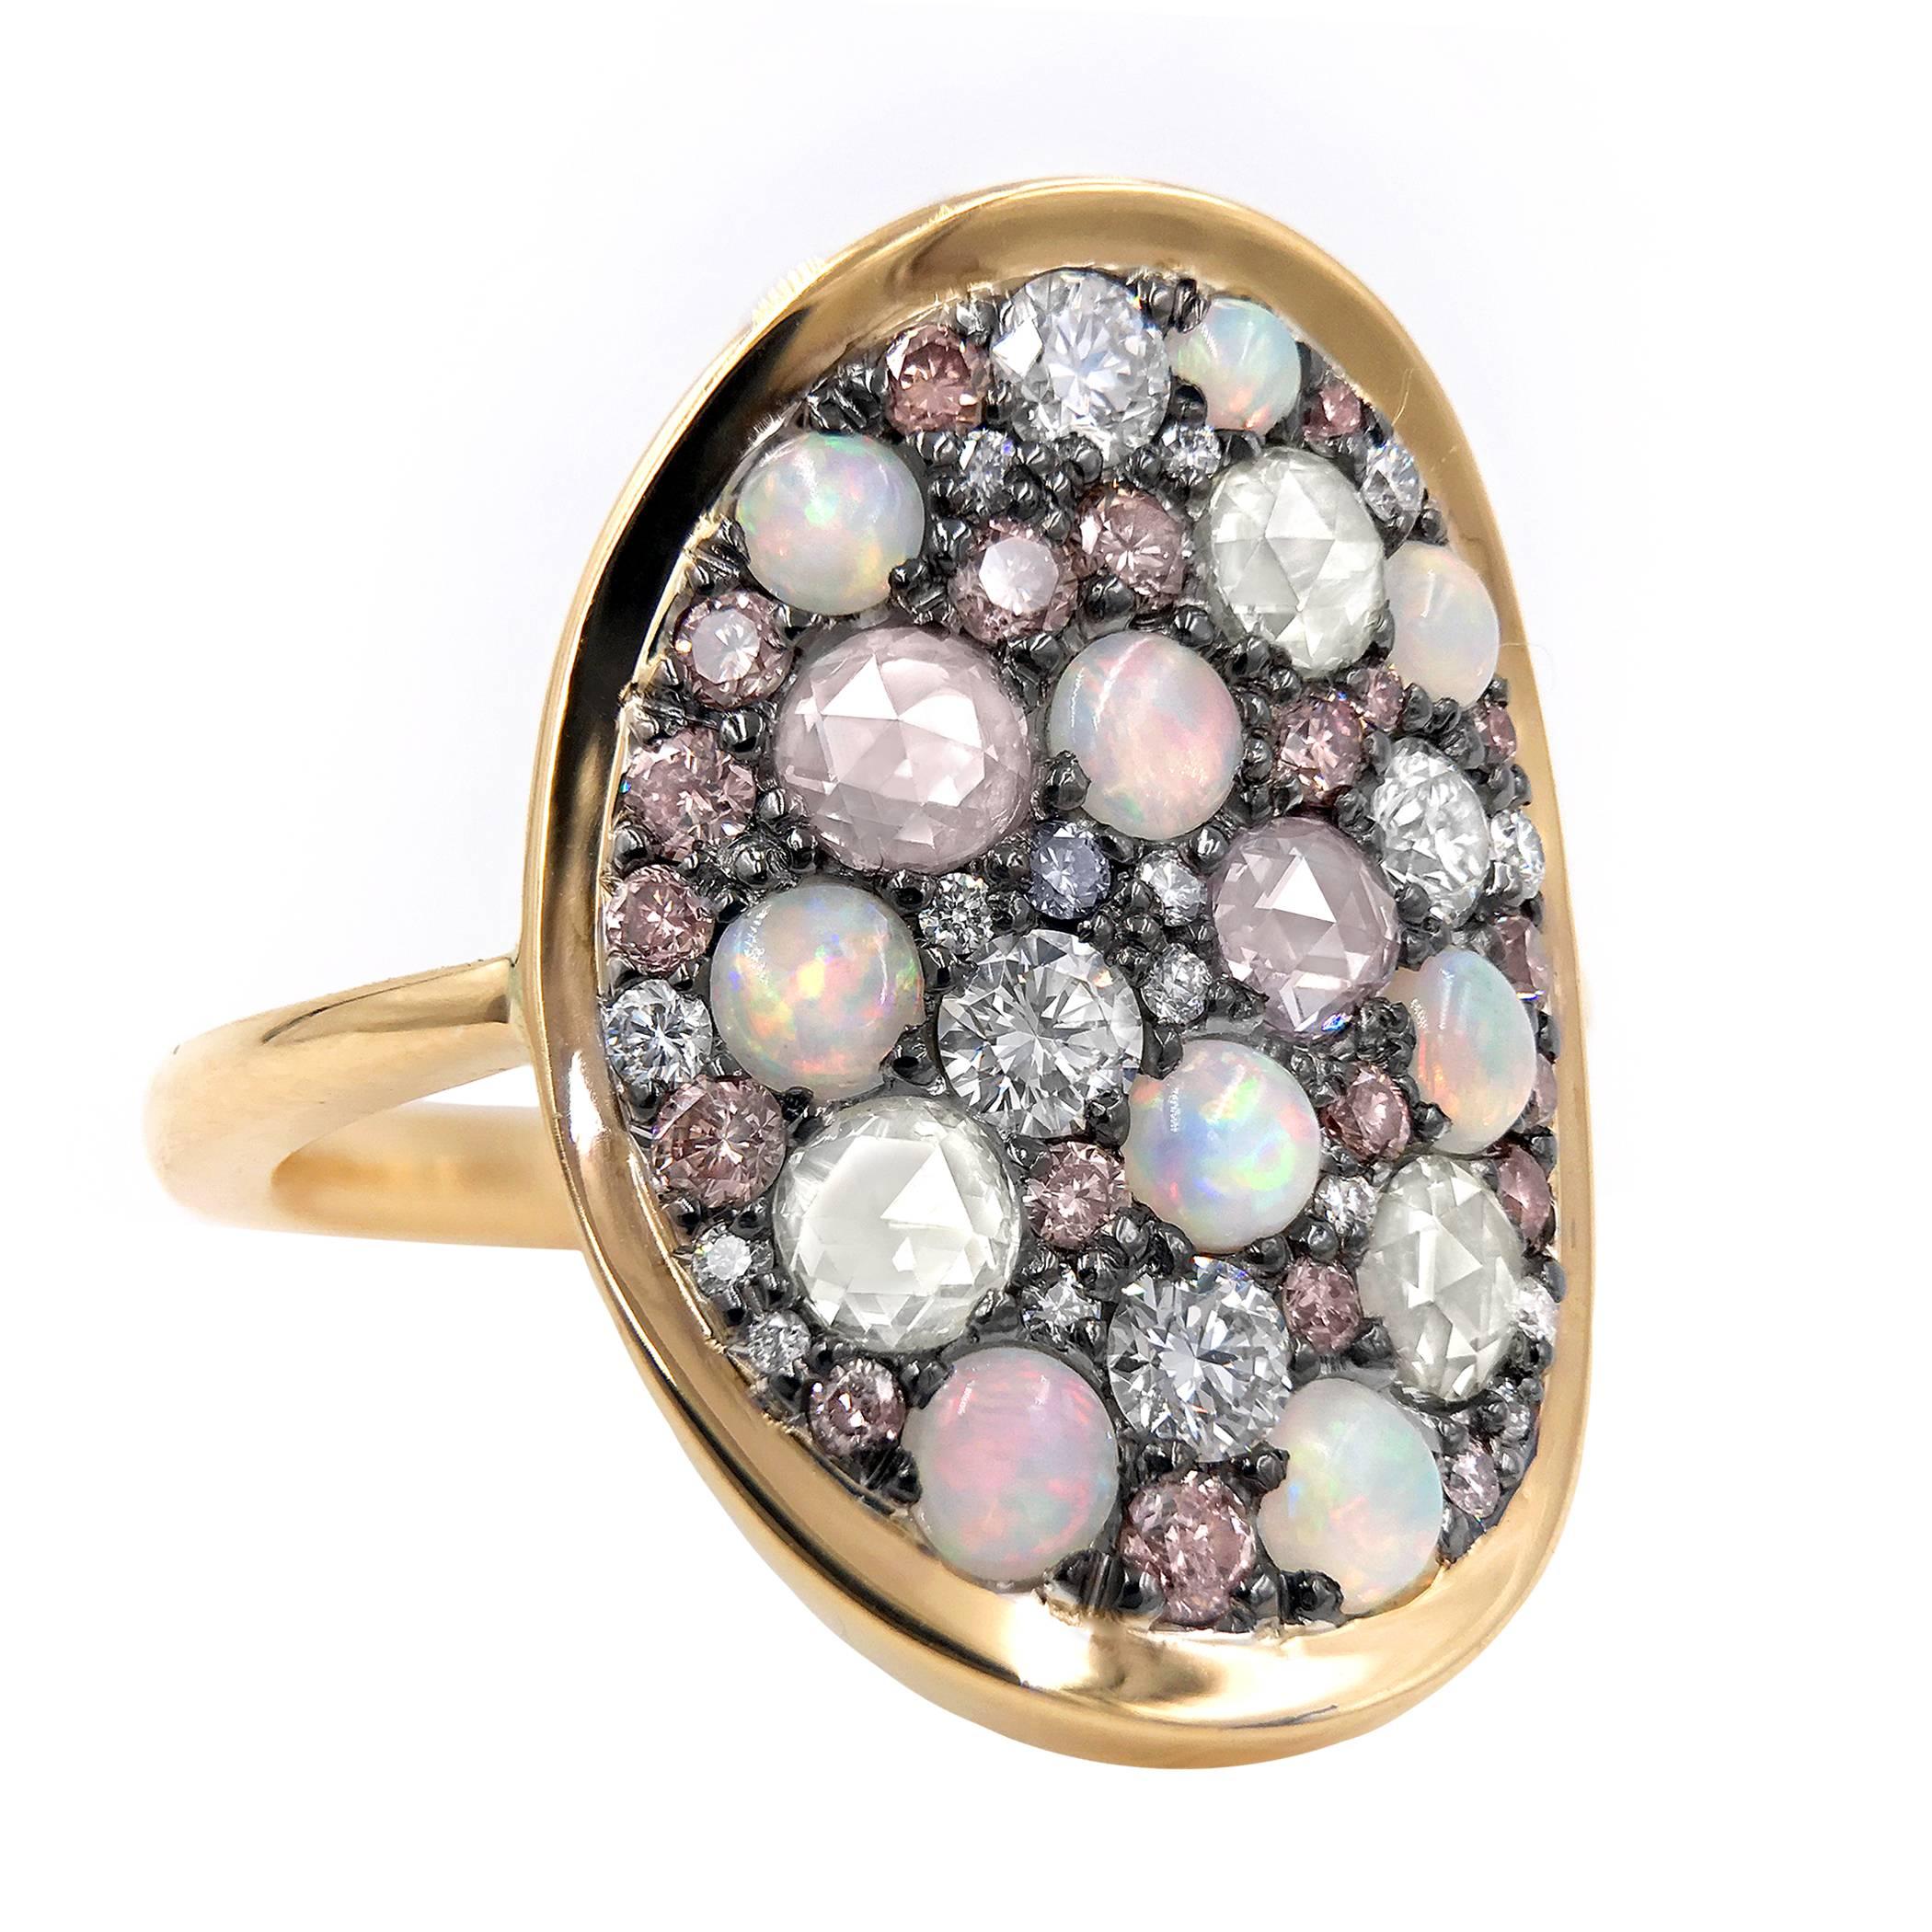 Joke Quick Natural Pink, Blue, and White Diamond Australian Opal Starstruck Ring